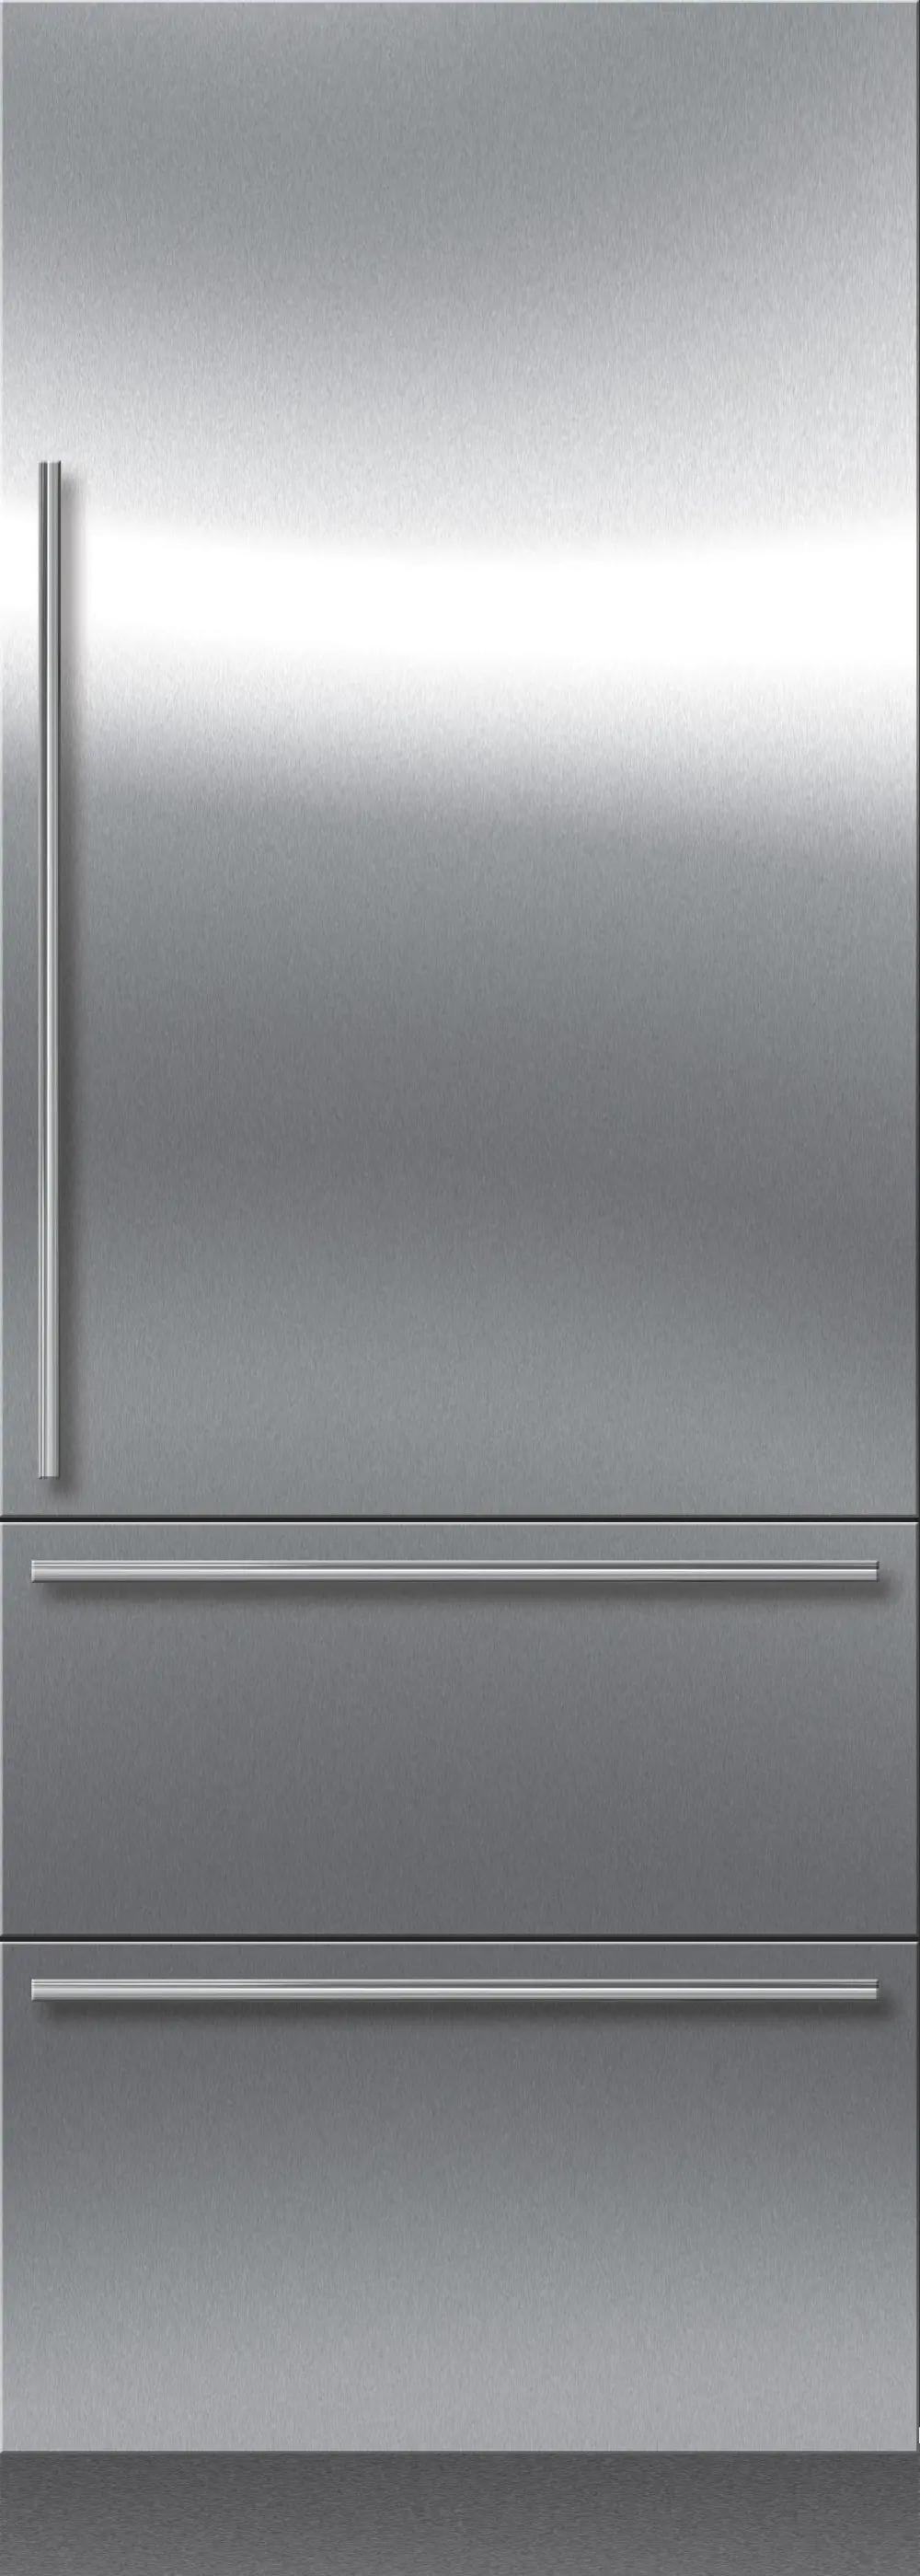 IT-30CIID-RH Sub-Zero 30 Inch Designer Bottom Freezer Refrigerator - Right Hinge, Panel Ready-1